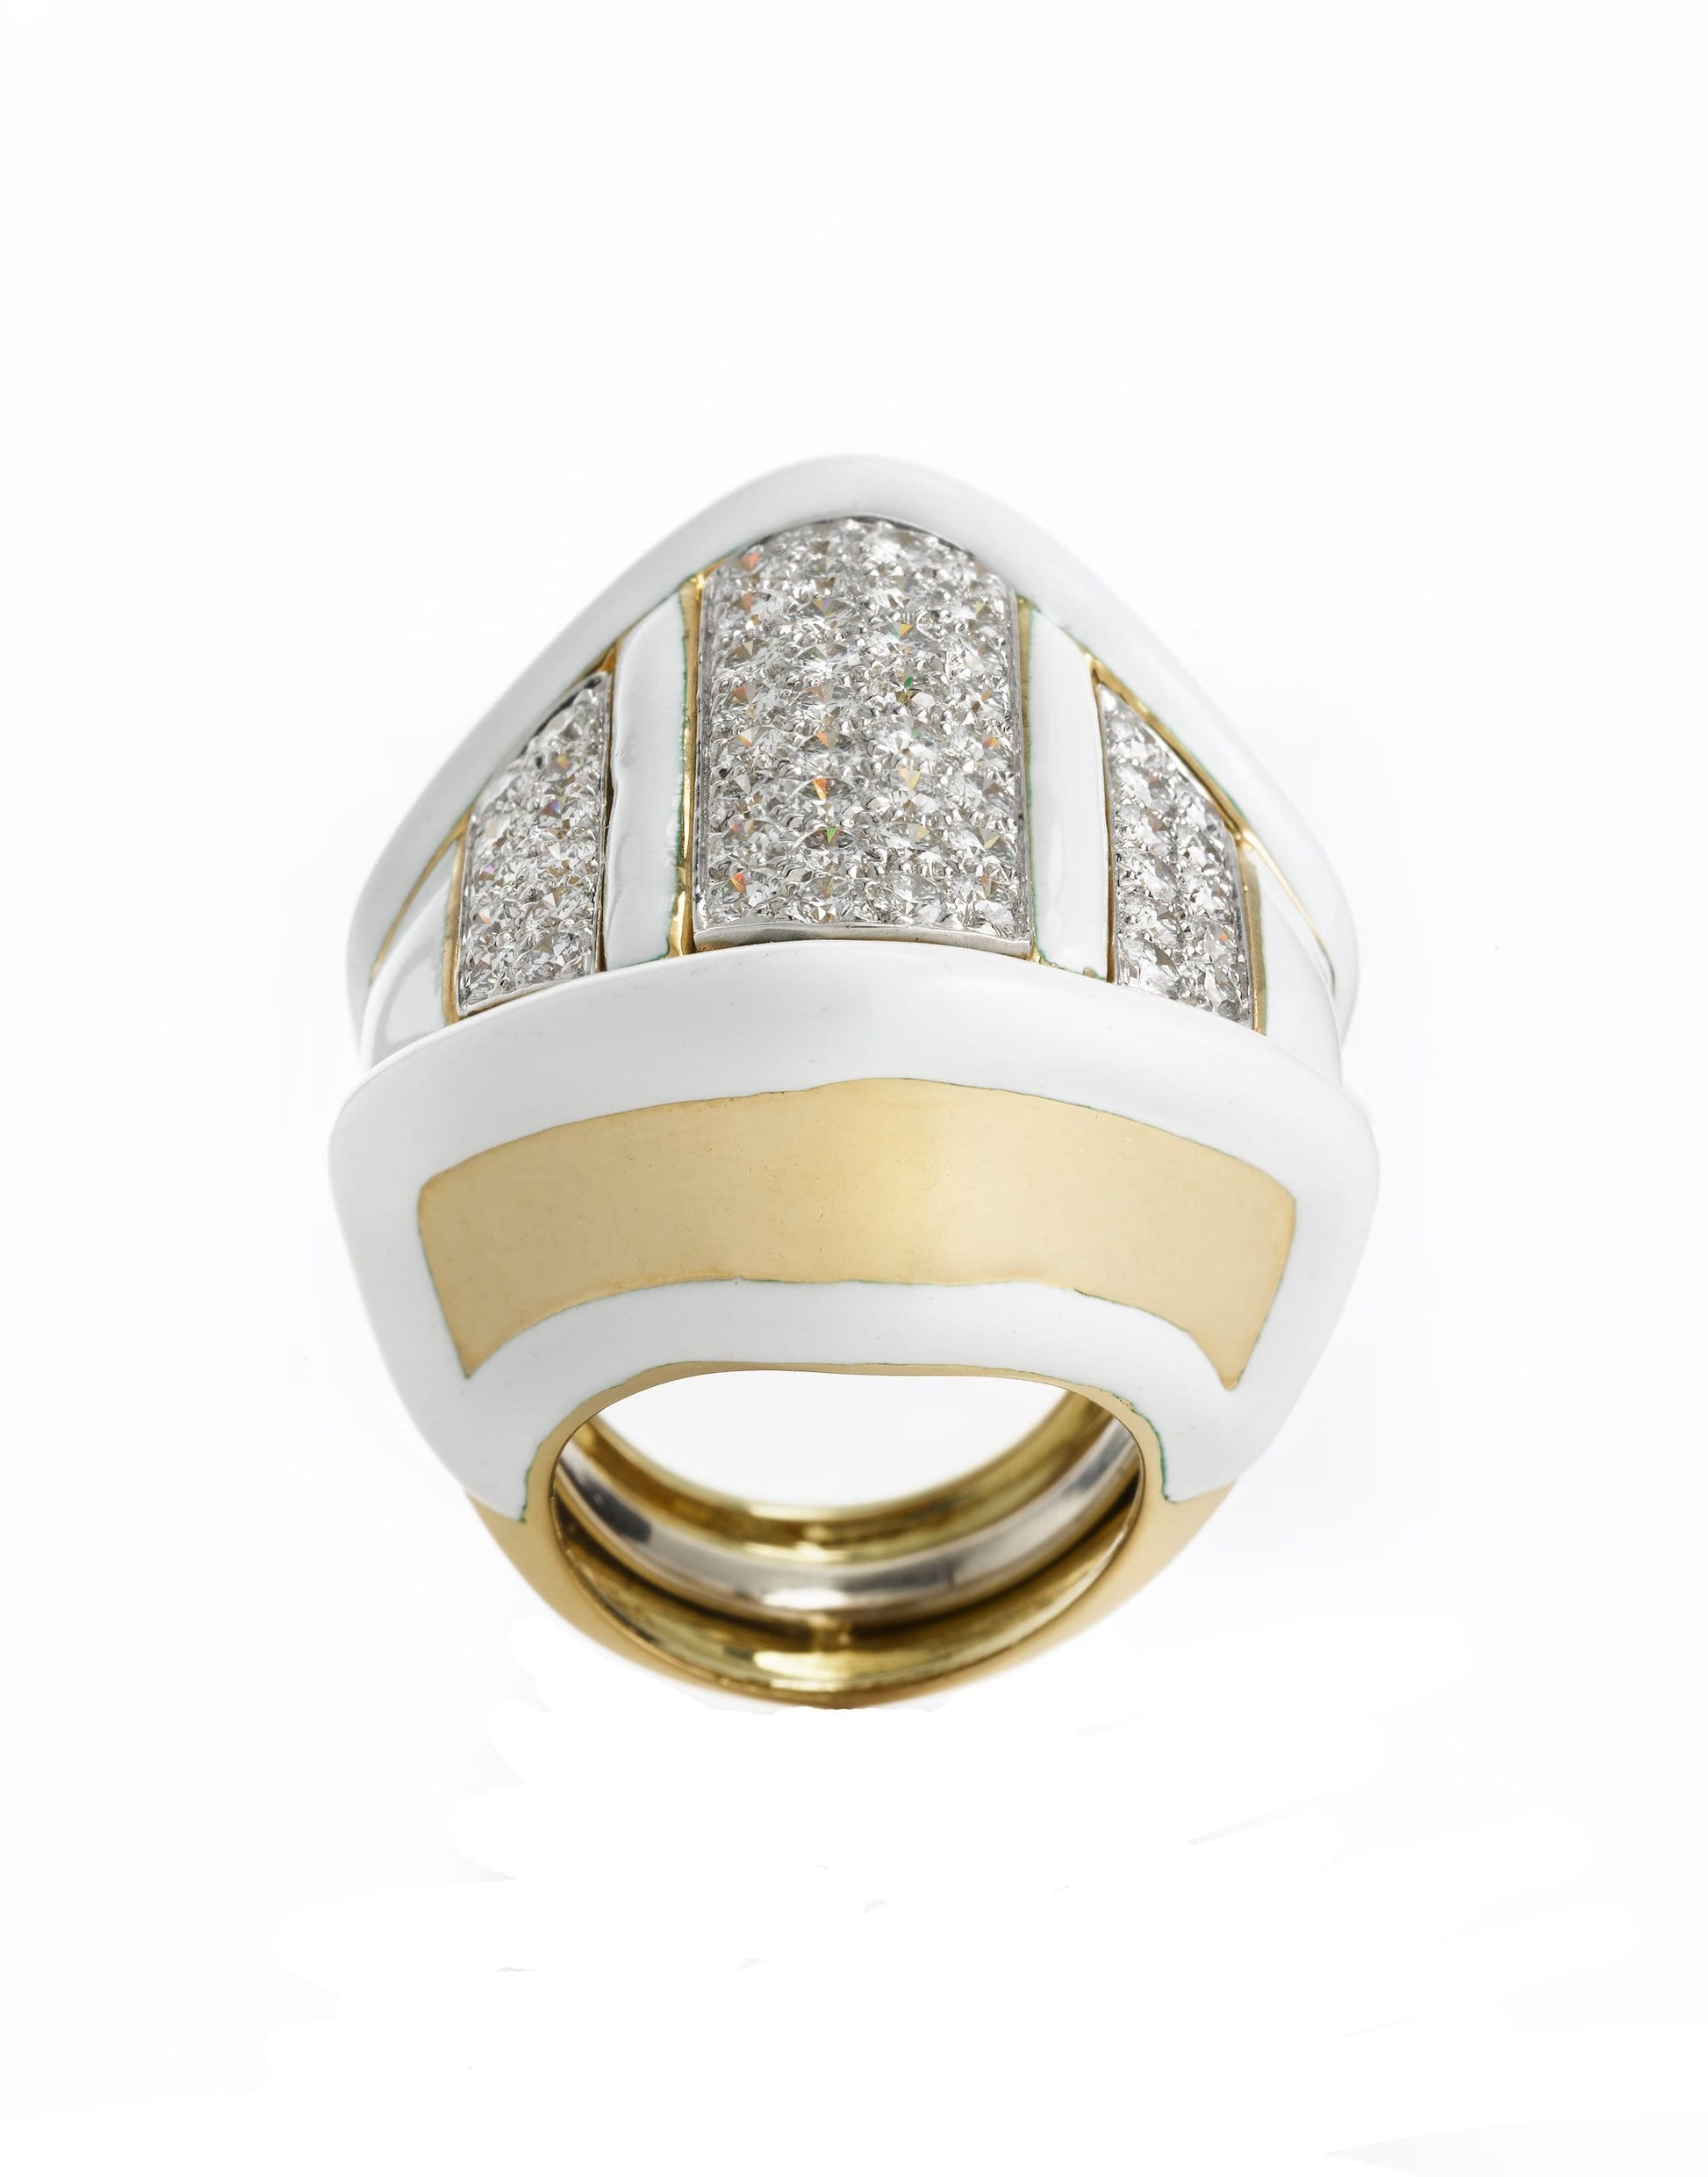 DAVID WEBB-White Enamel and Diamond Ring-YELLOW GOLD